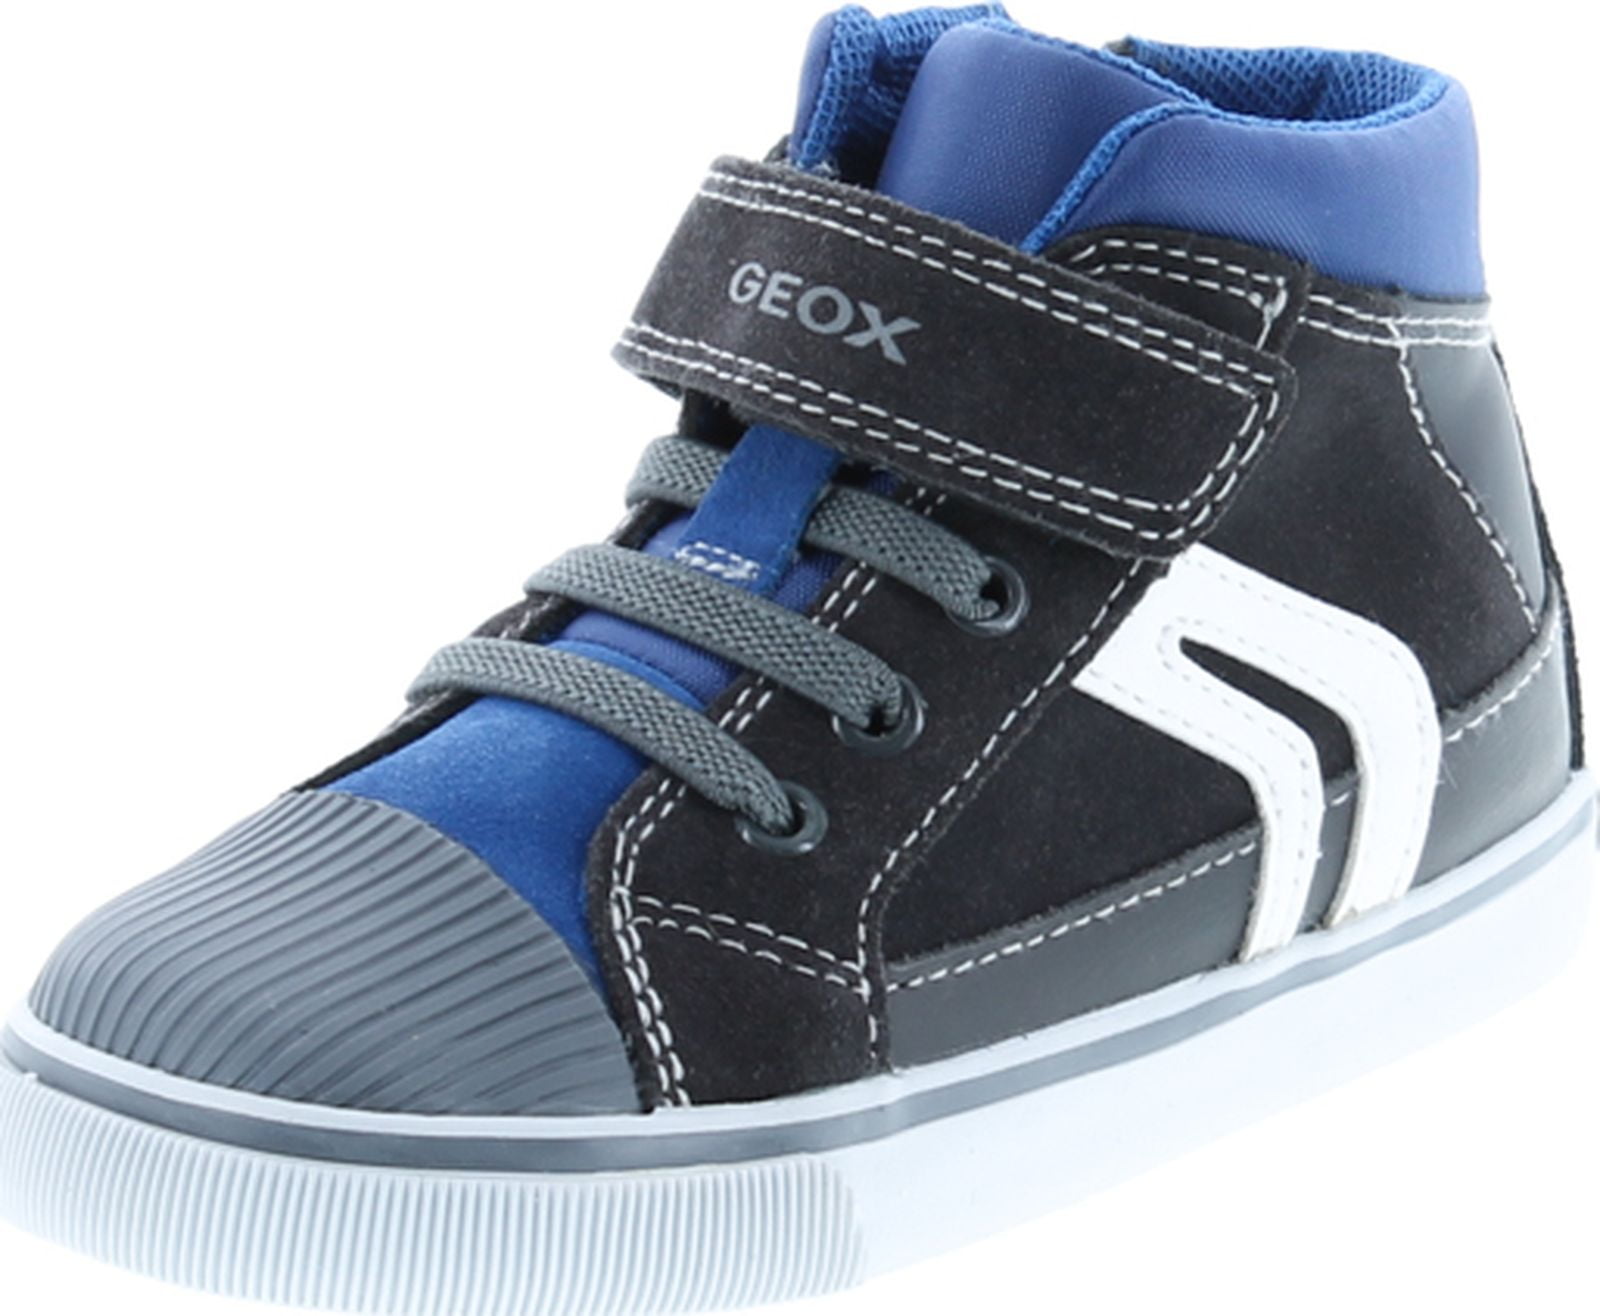 Geox Boys Sneakers, Dark Grey/Royal, 22 Walmart.com